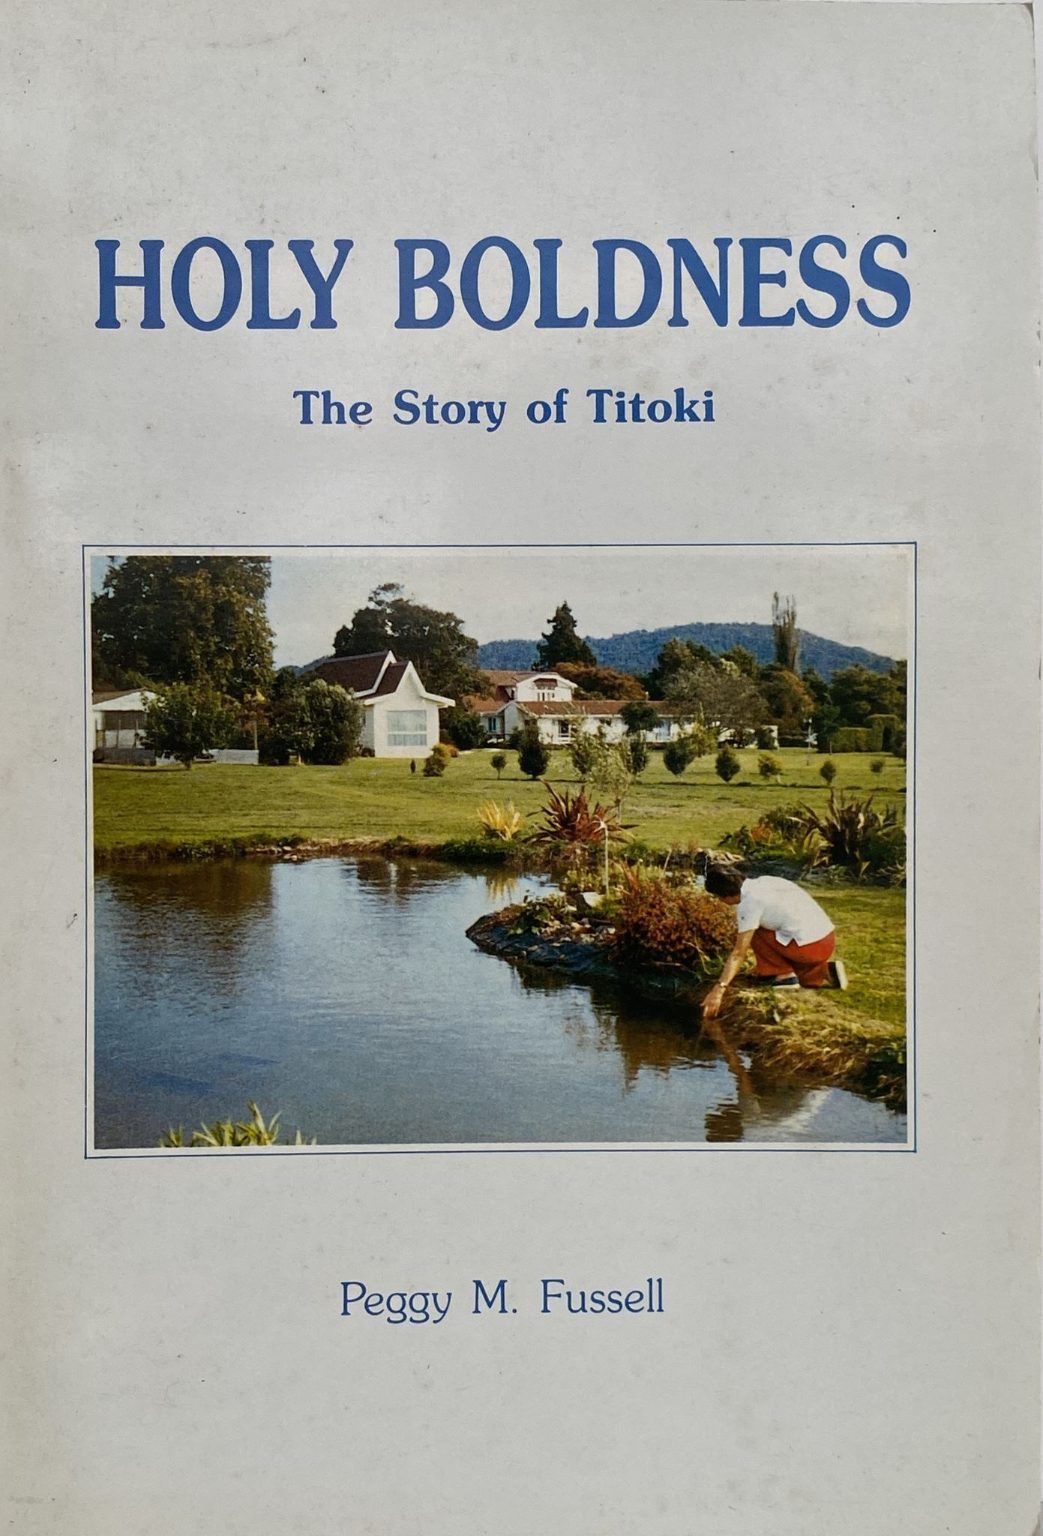 HOLY BOLDNESS: The Story Of Titoki